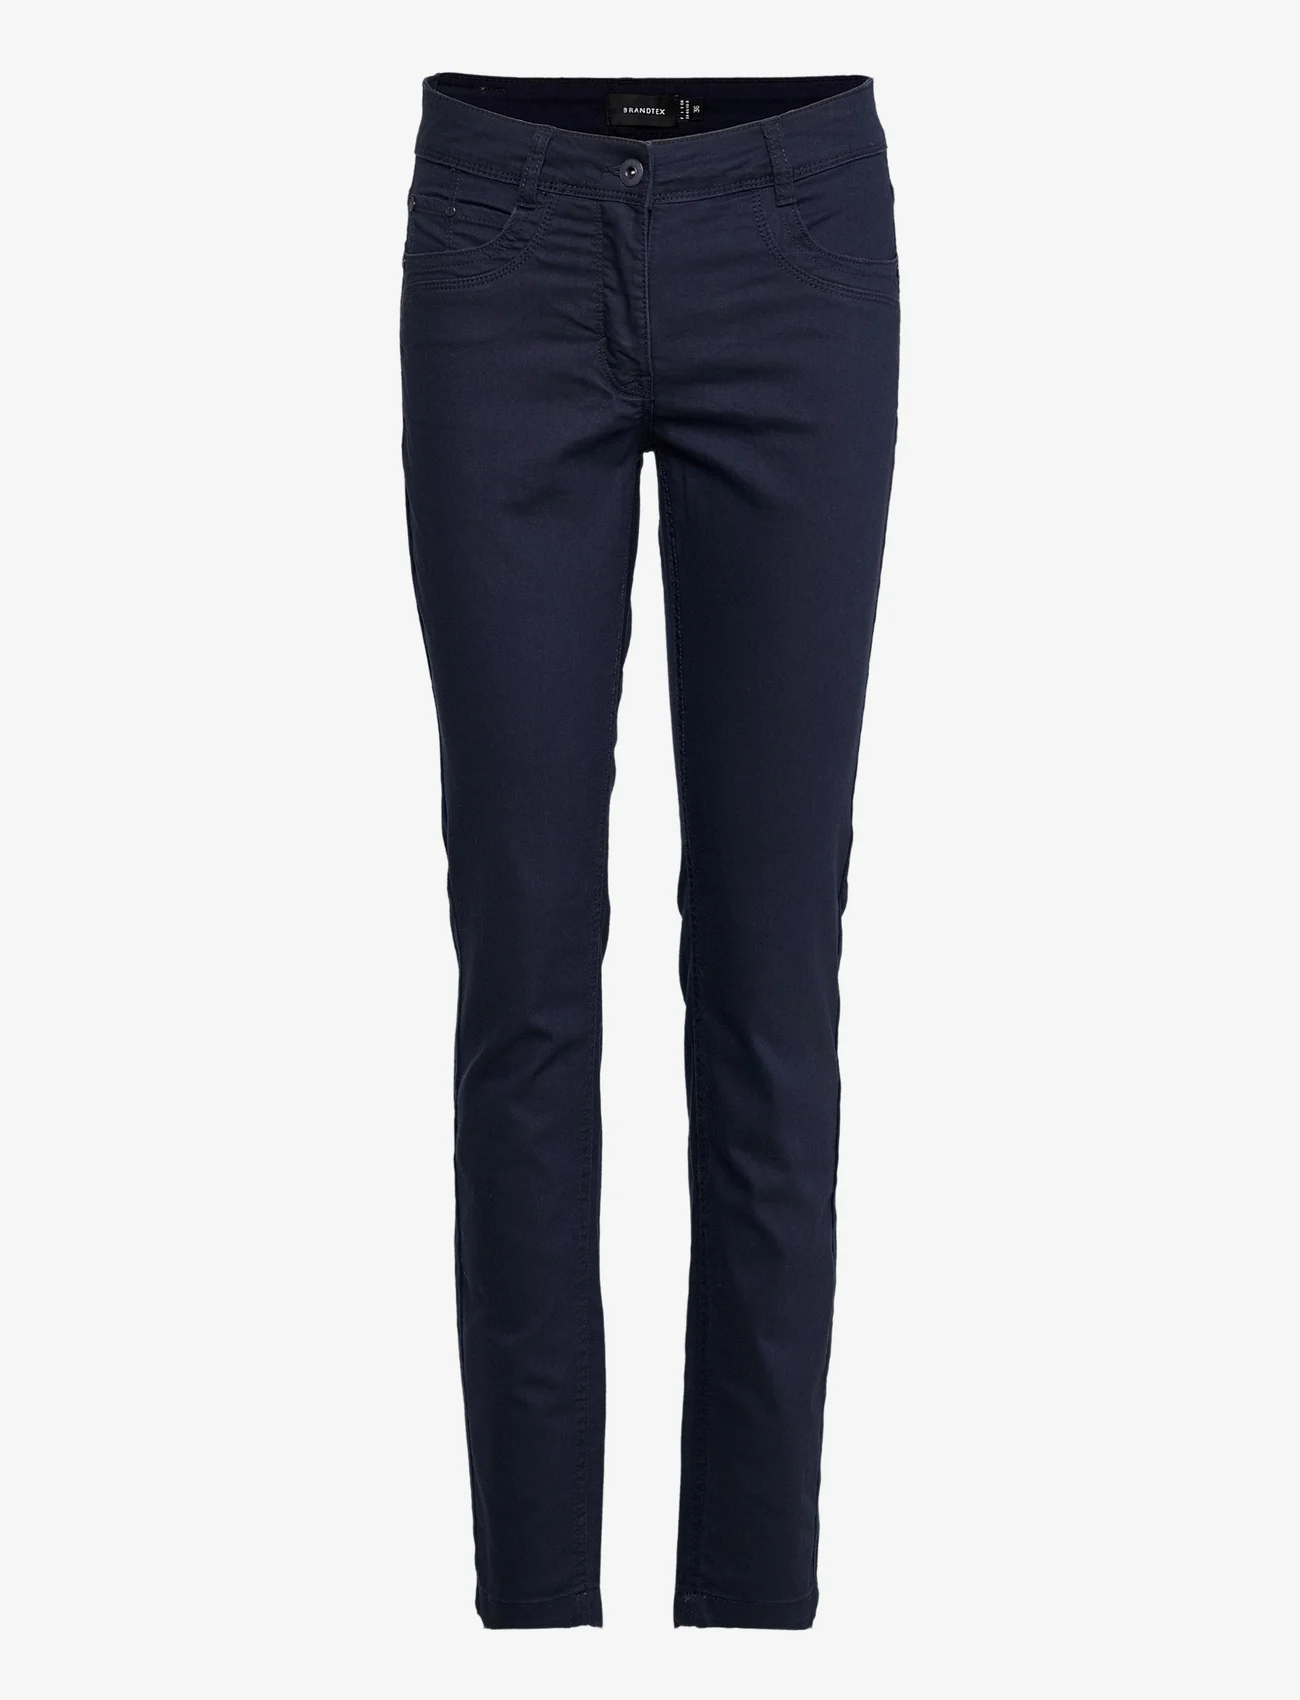 Brandtex - Casual pants - slim jeans - midnight blue - 0